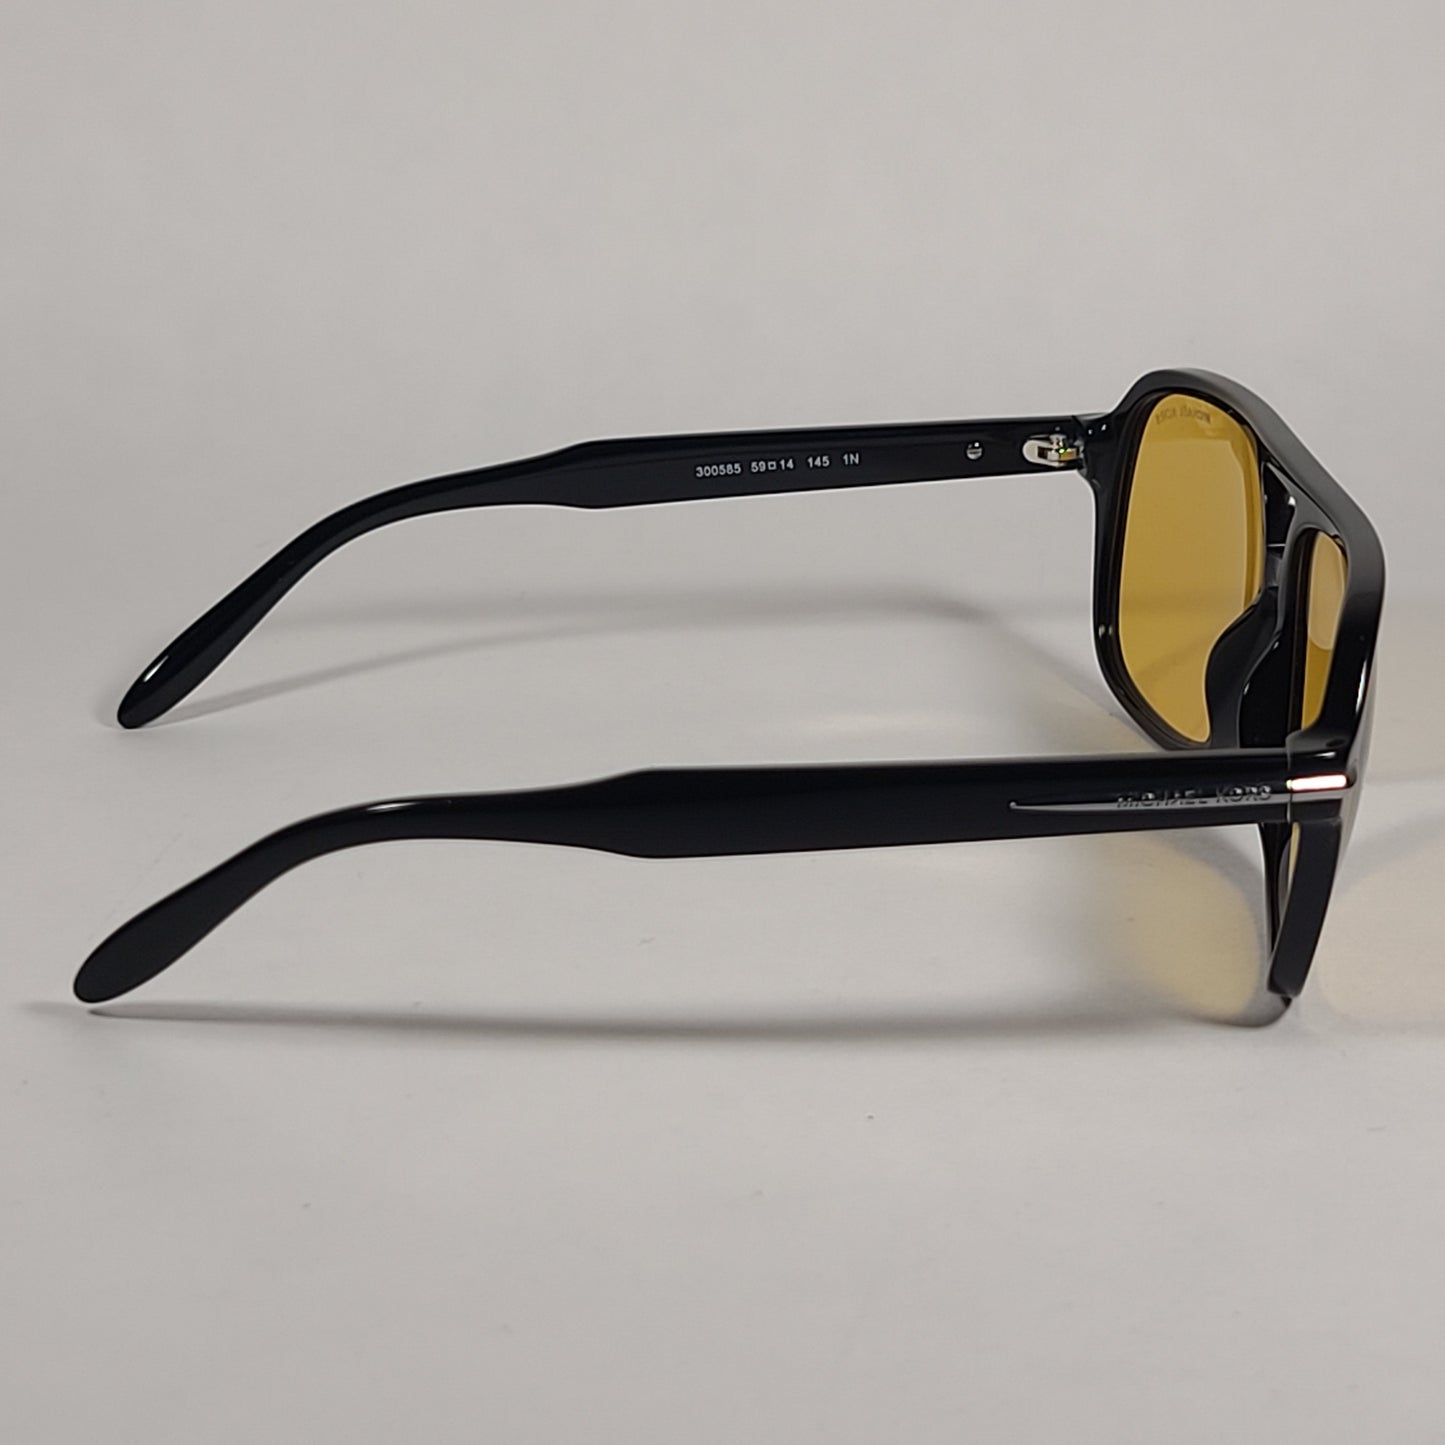 Michael Kors Liam Molded Aviator Sunglasses Shiny Black Frame Amber Yellow Lens MK2115